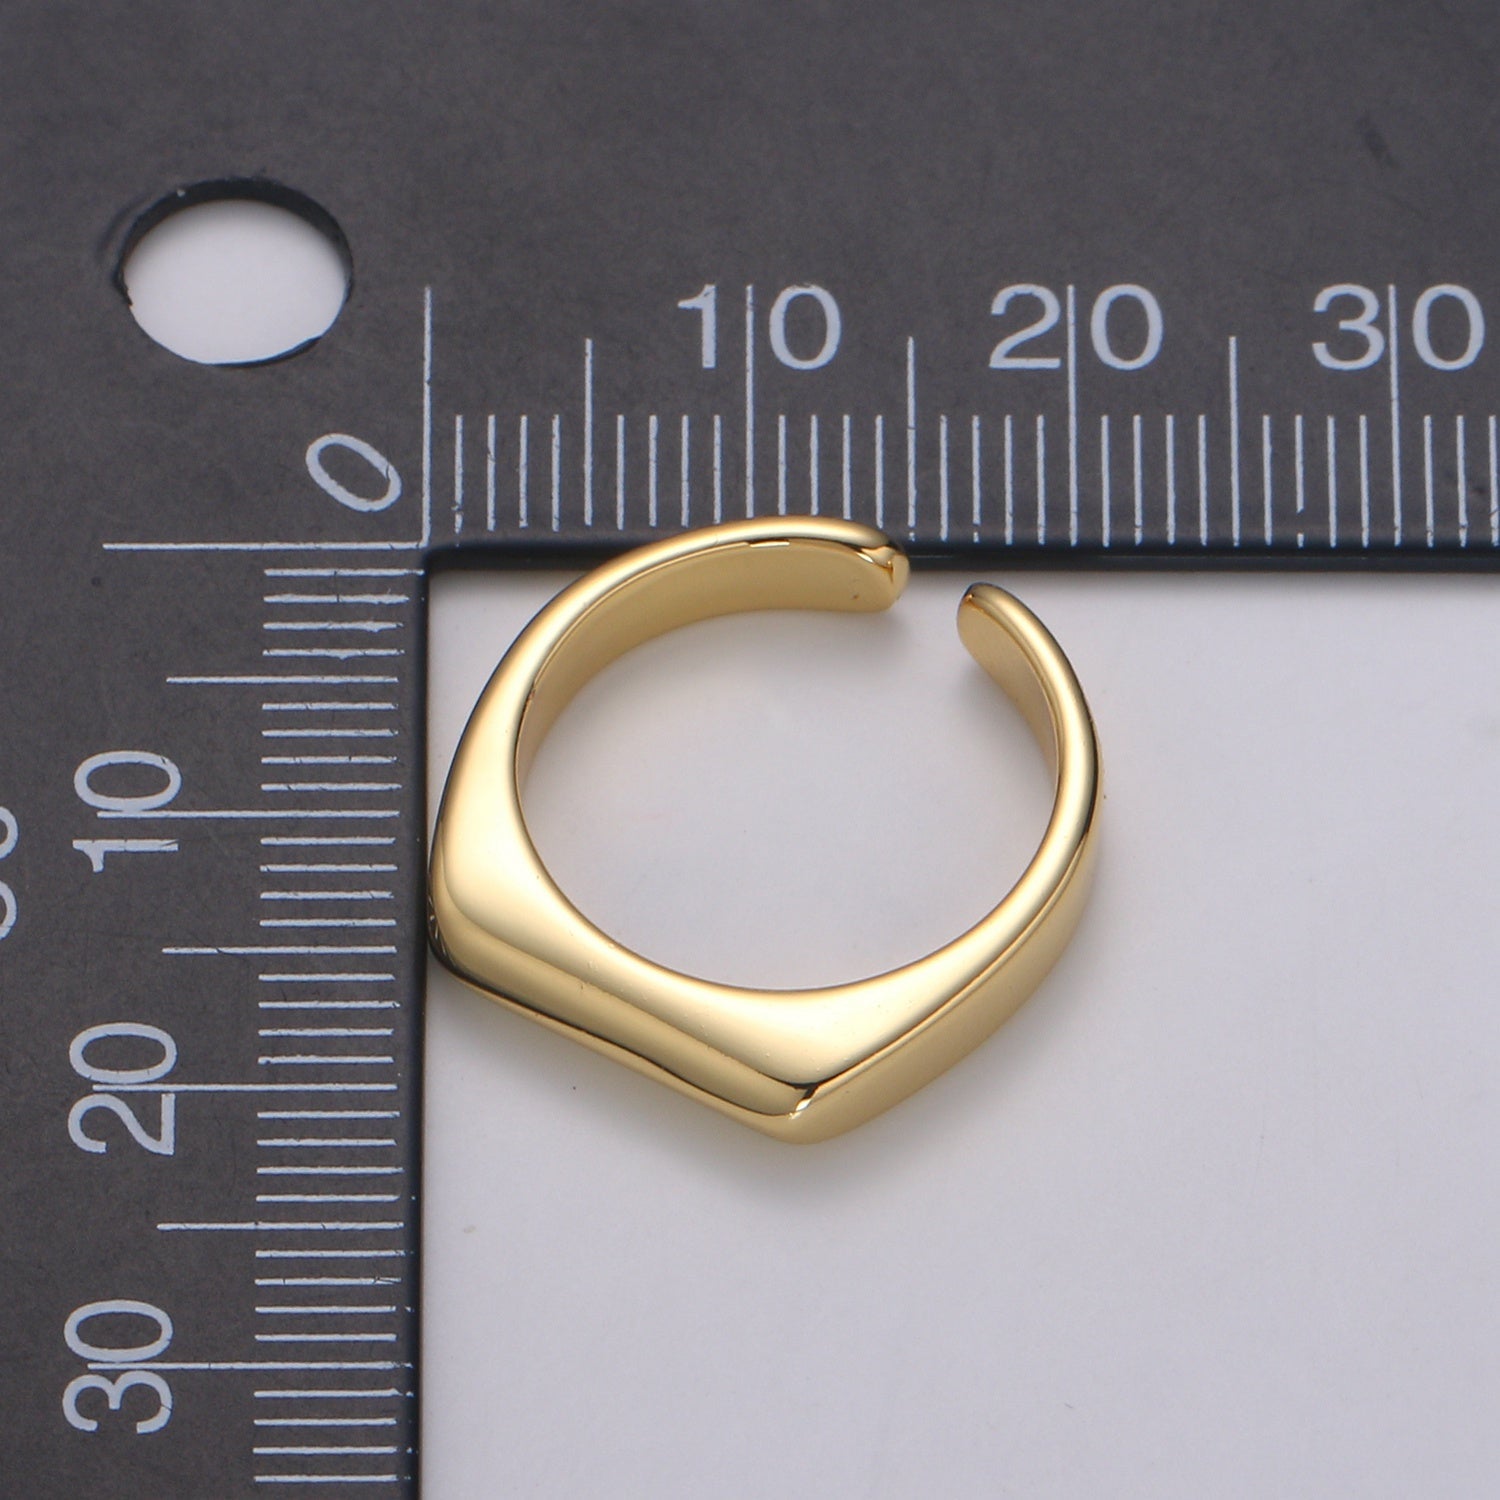 Dainty Signet ring - Square signet - Minimalist gold ring - Signet gold- Stack ring - Dainty Open ring - Size 6 gold ring - DLUXCA